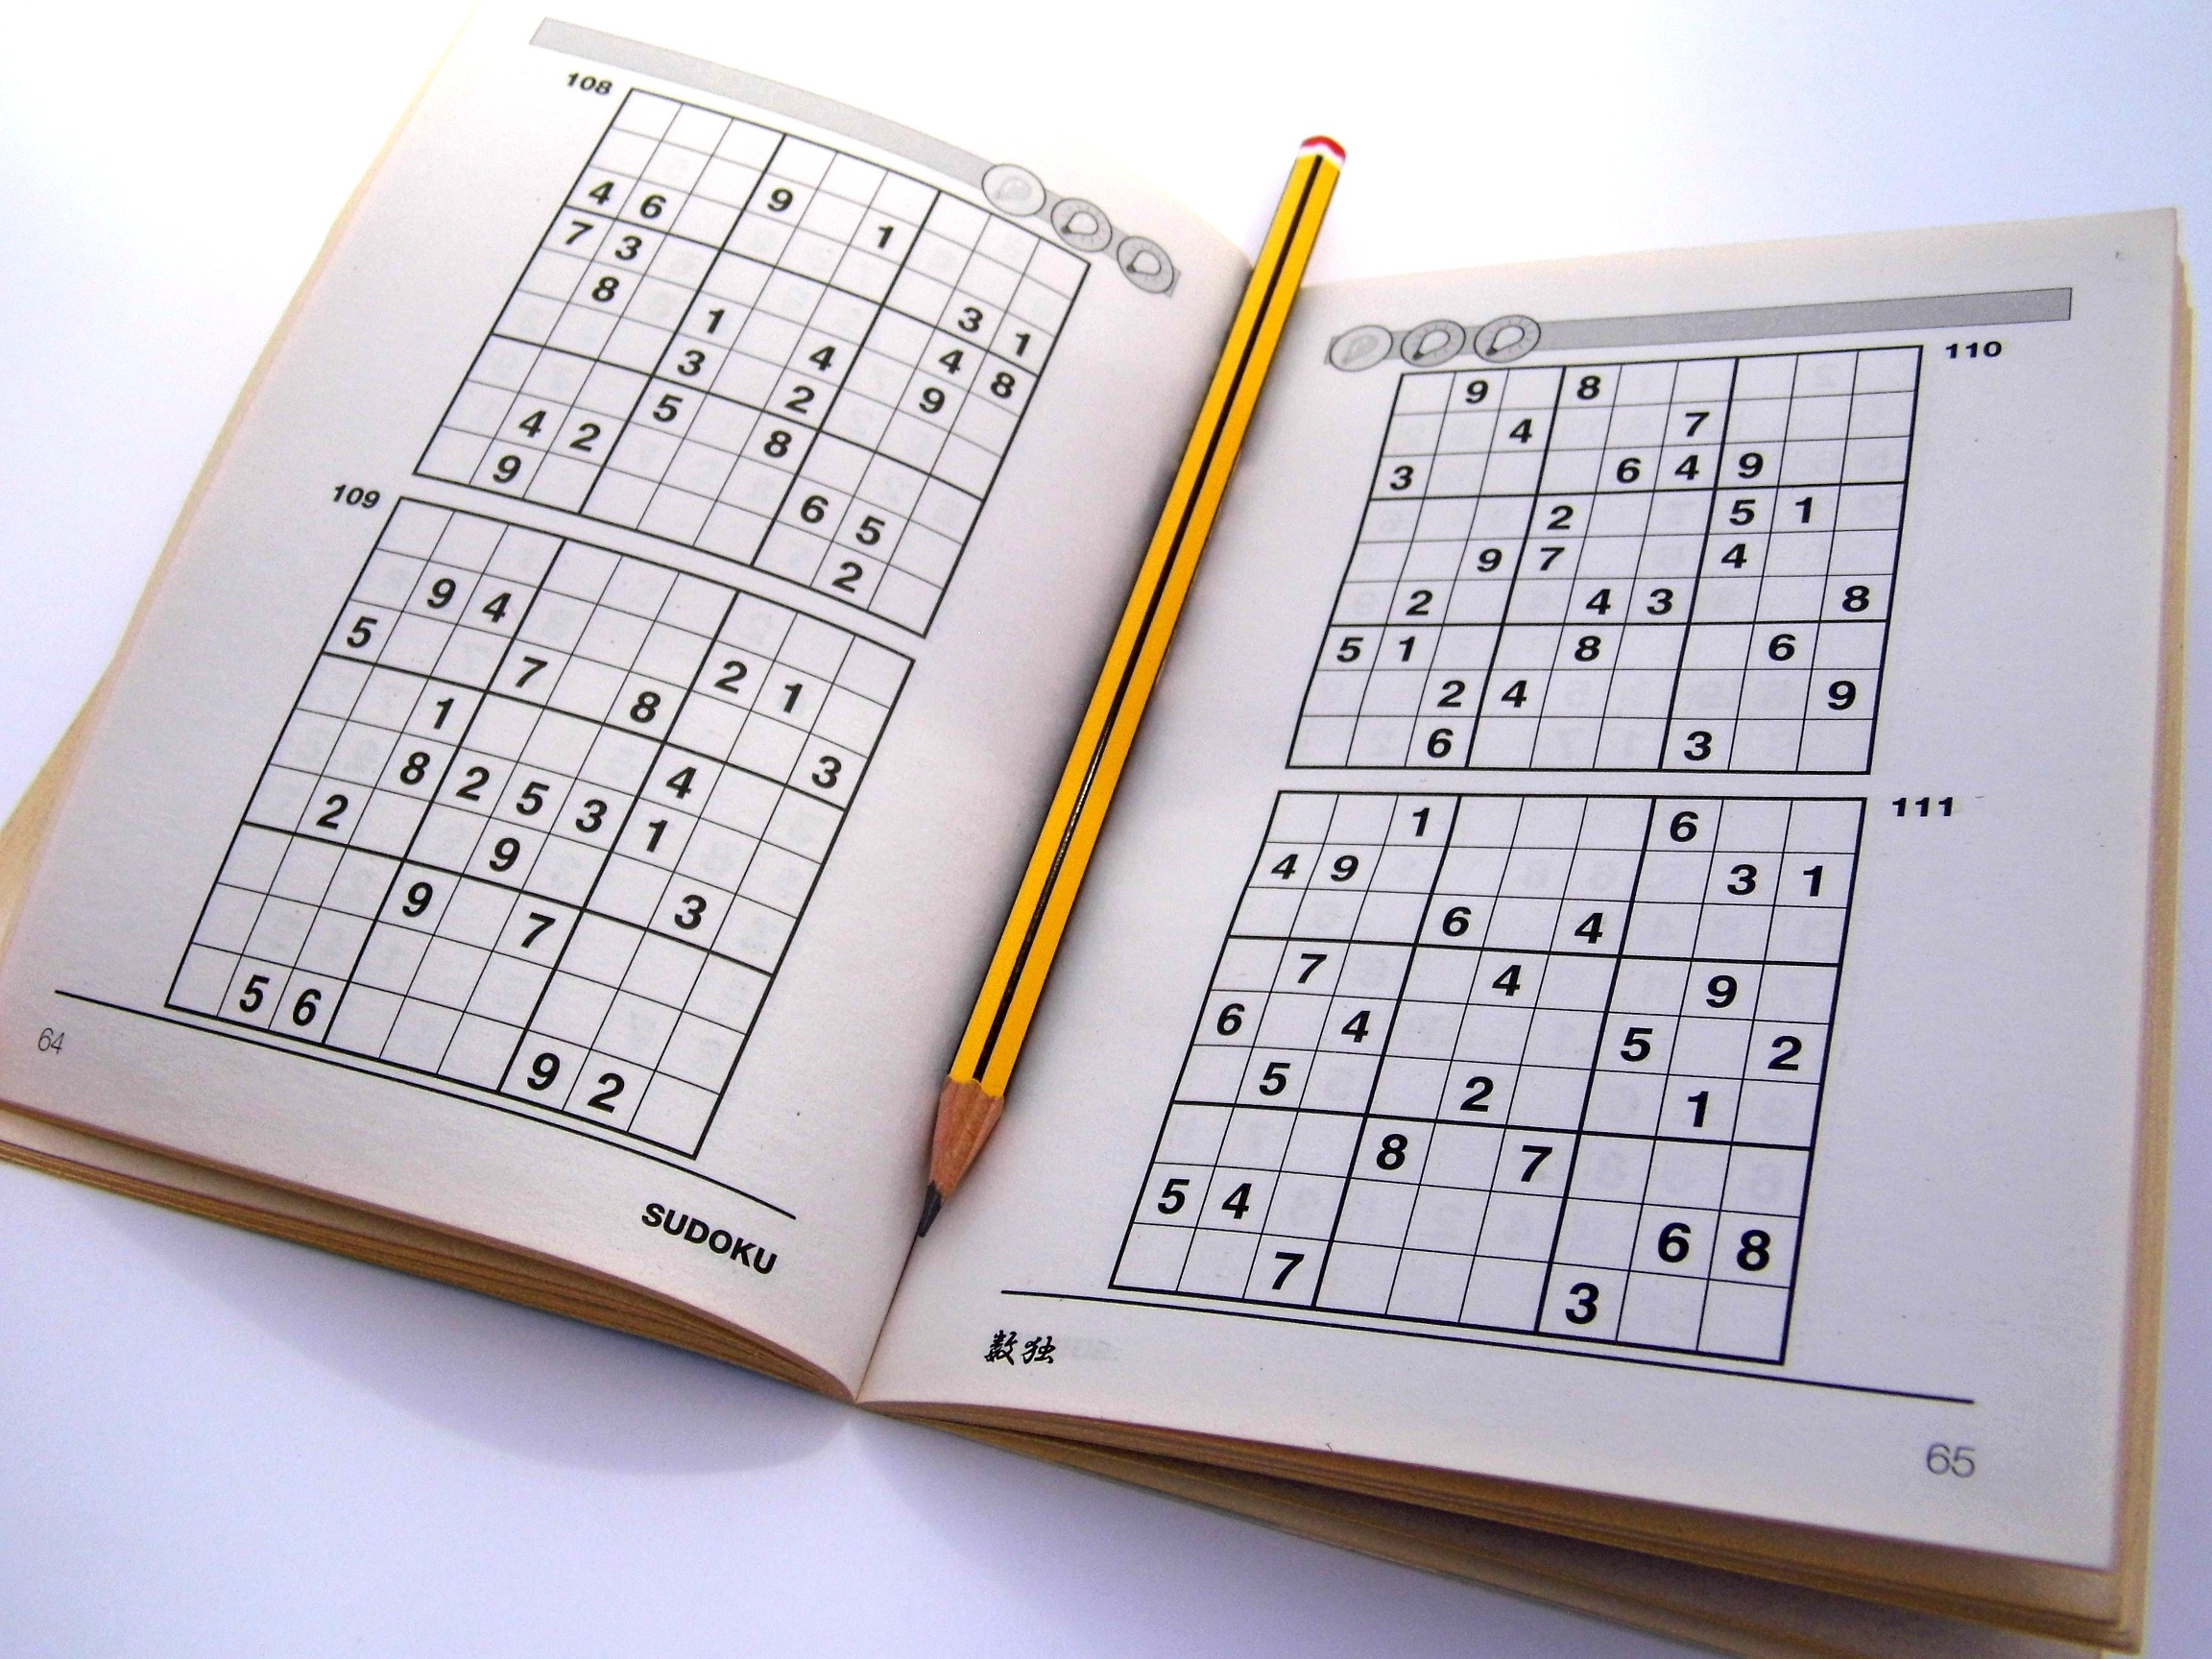 Free Sudoku Puzzles – Free Sudoku Puzzles From Easy To Evil Level - Free Printable Sudoku Books